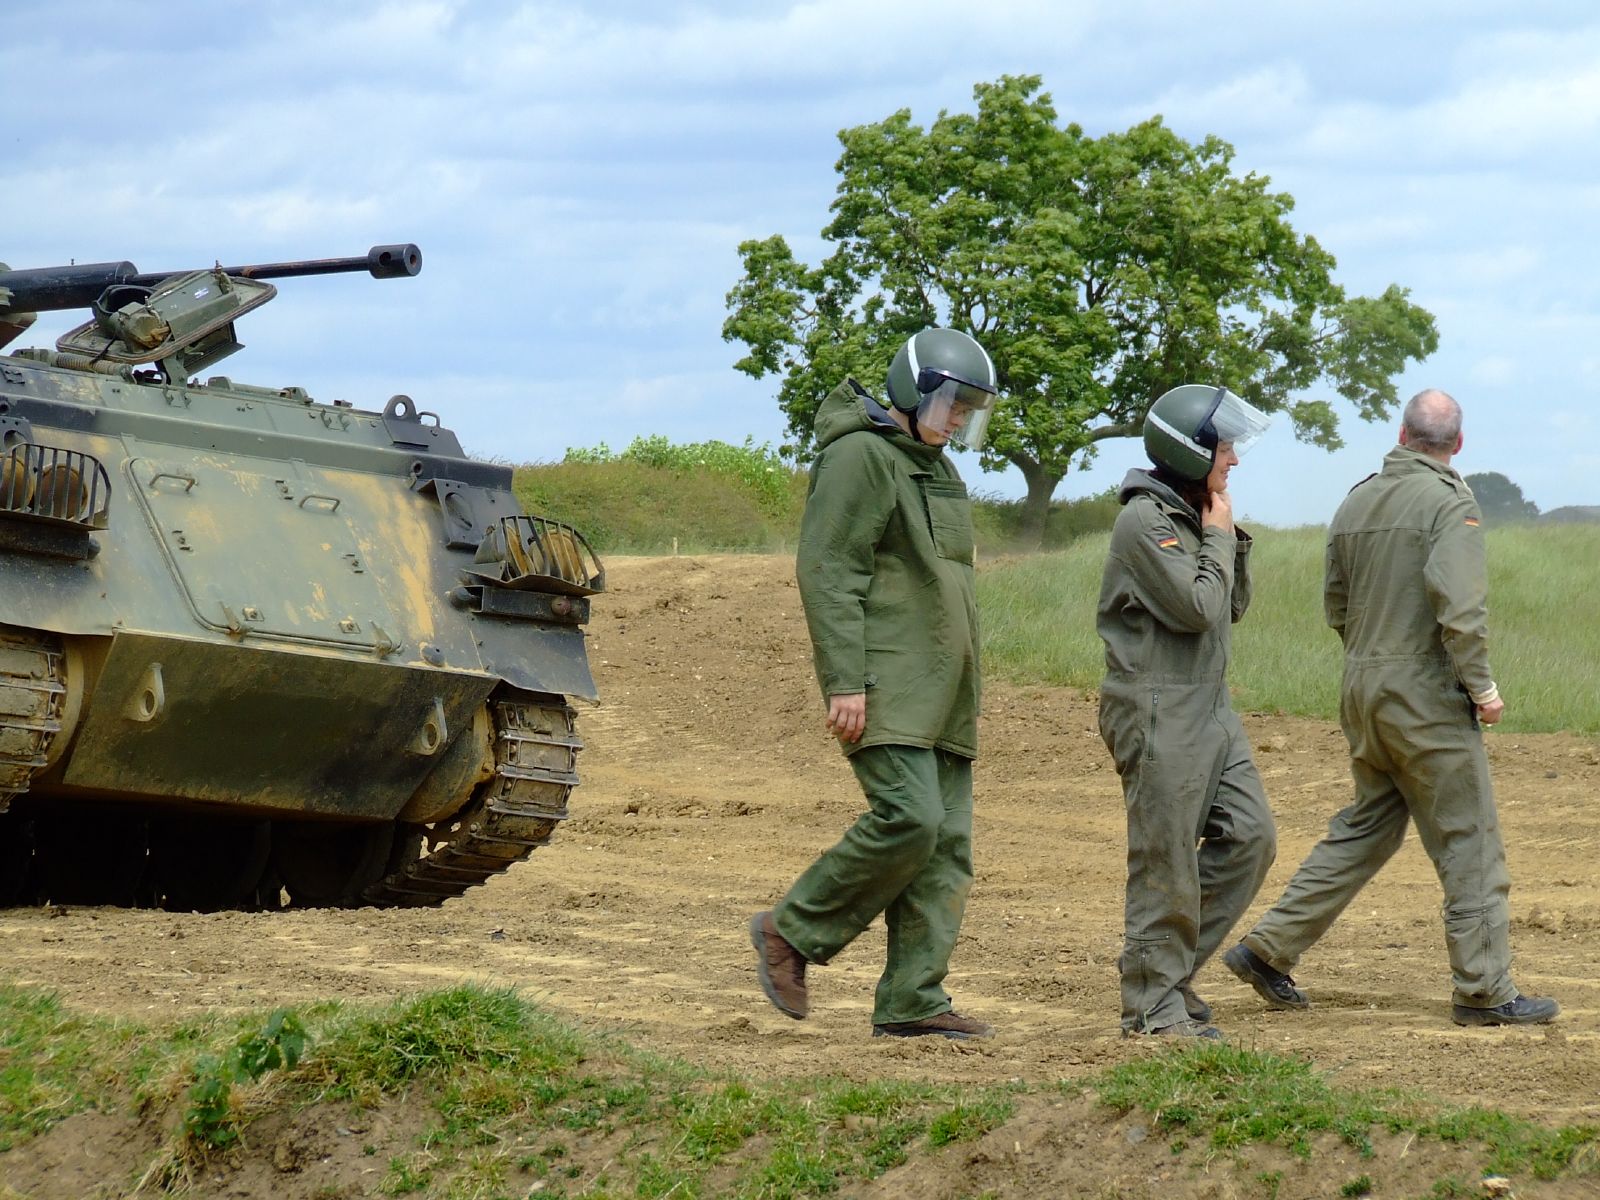 three soldiers walk past a military tank